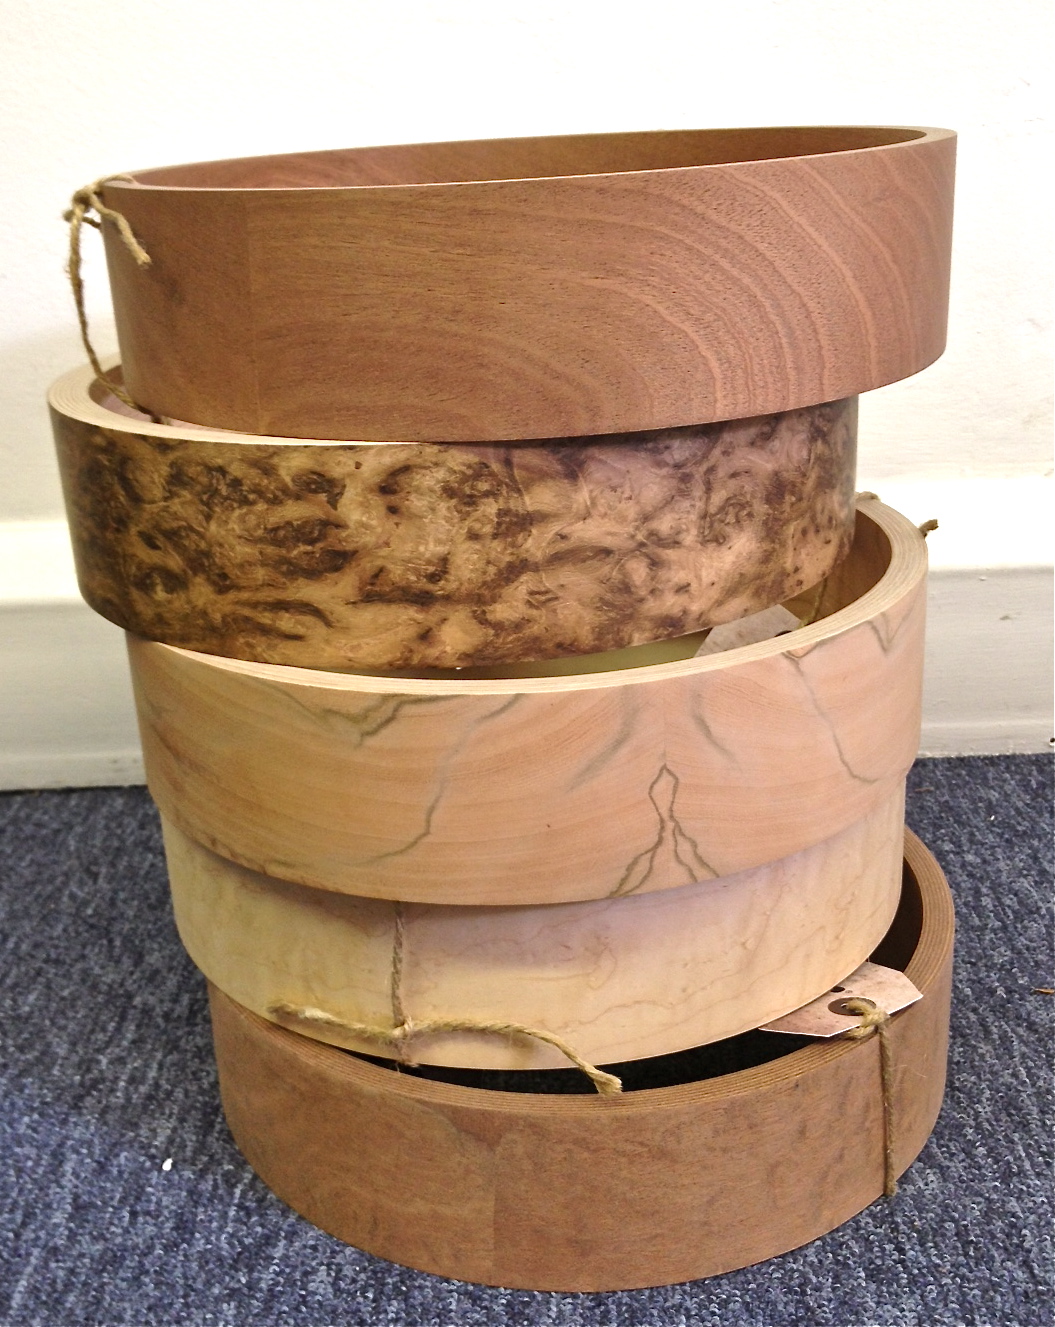 Prototype Shackleton banjo rims